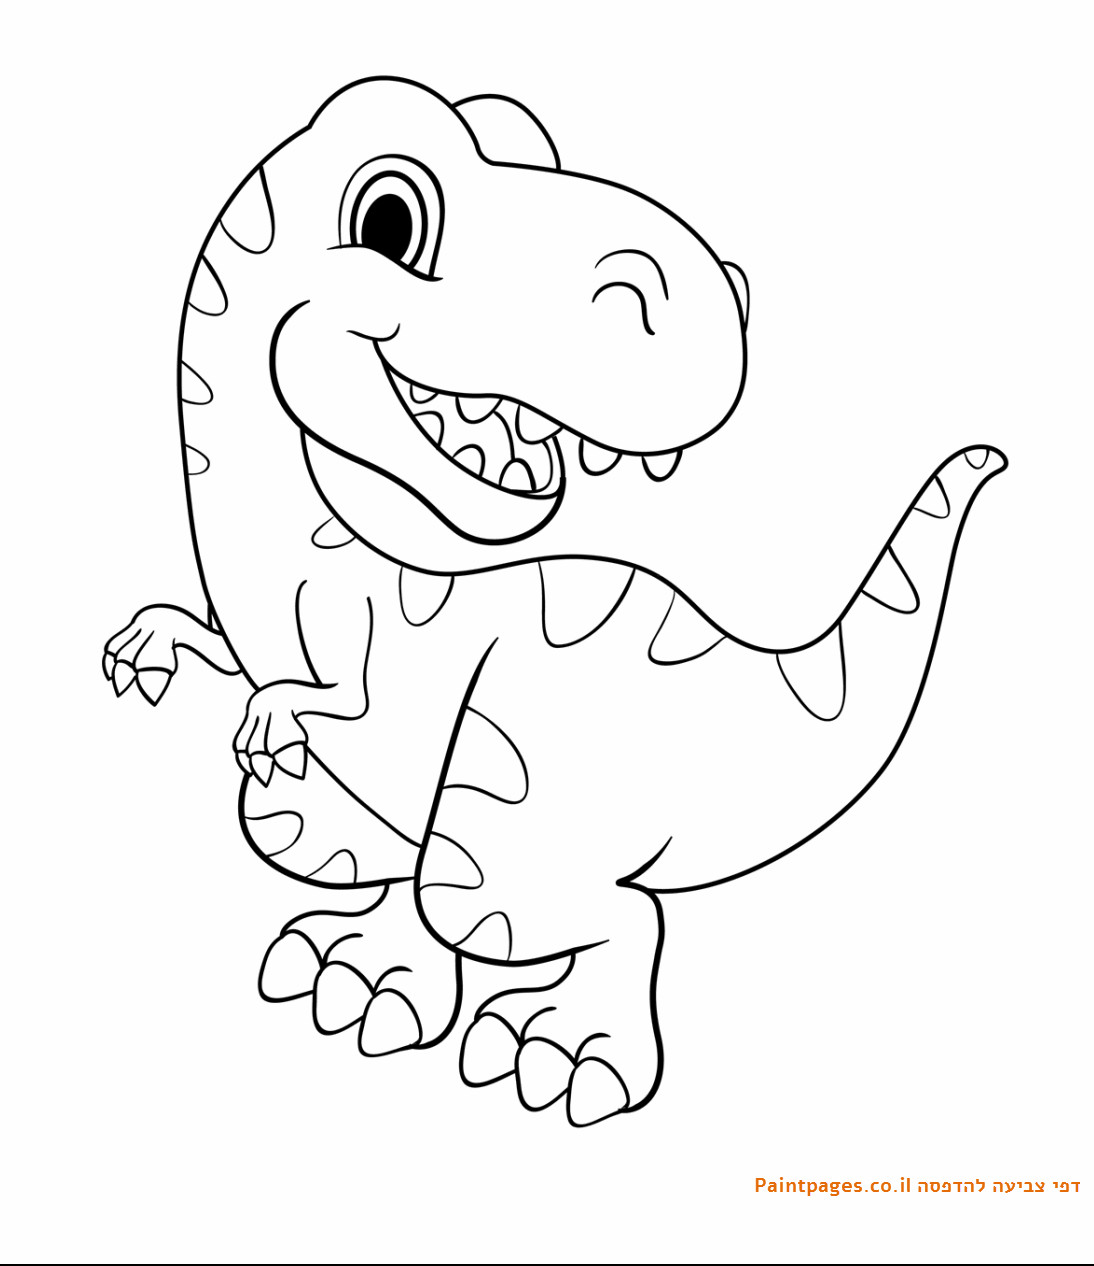 Baby Dinosaur Coloring Page
 דף צביעה דינוזאור רקס